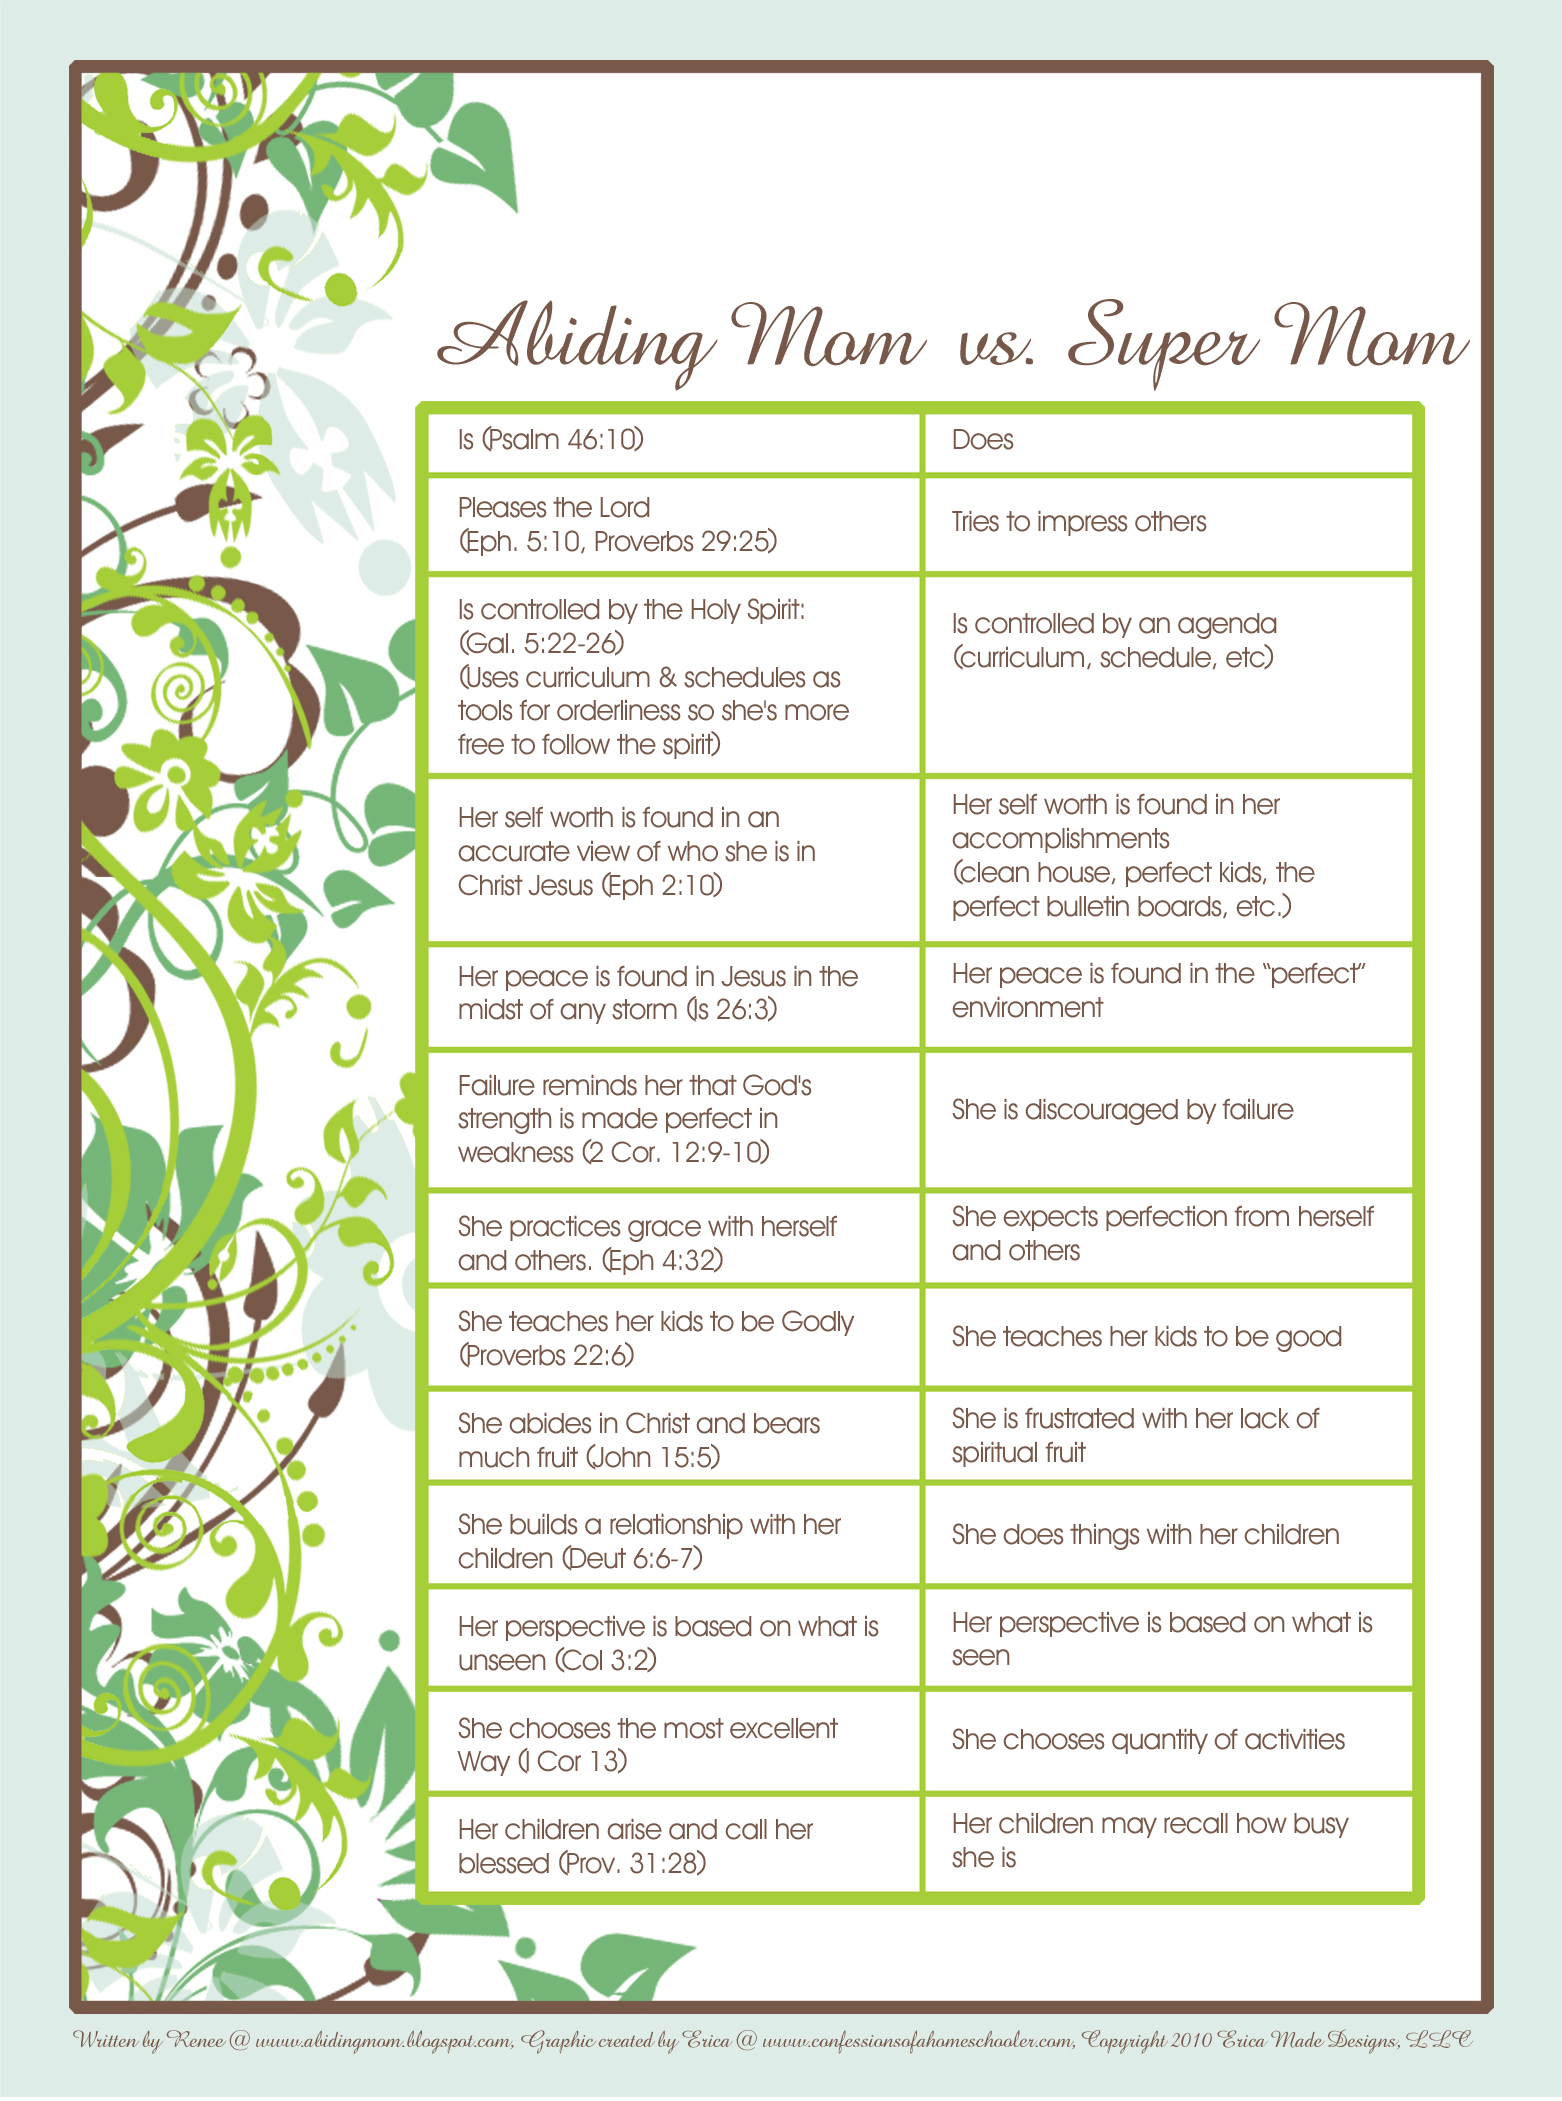 super-mom-vs-abiding-mom-confessions-of-a-homeschooler